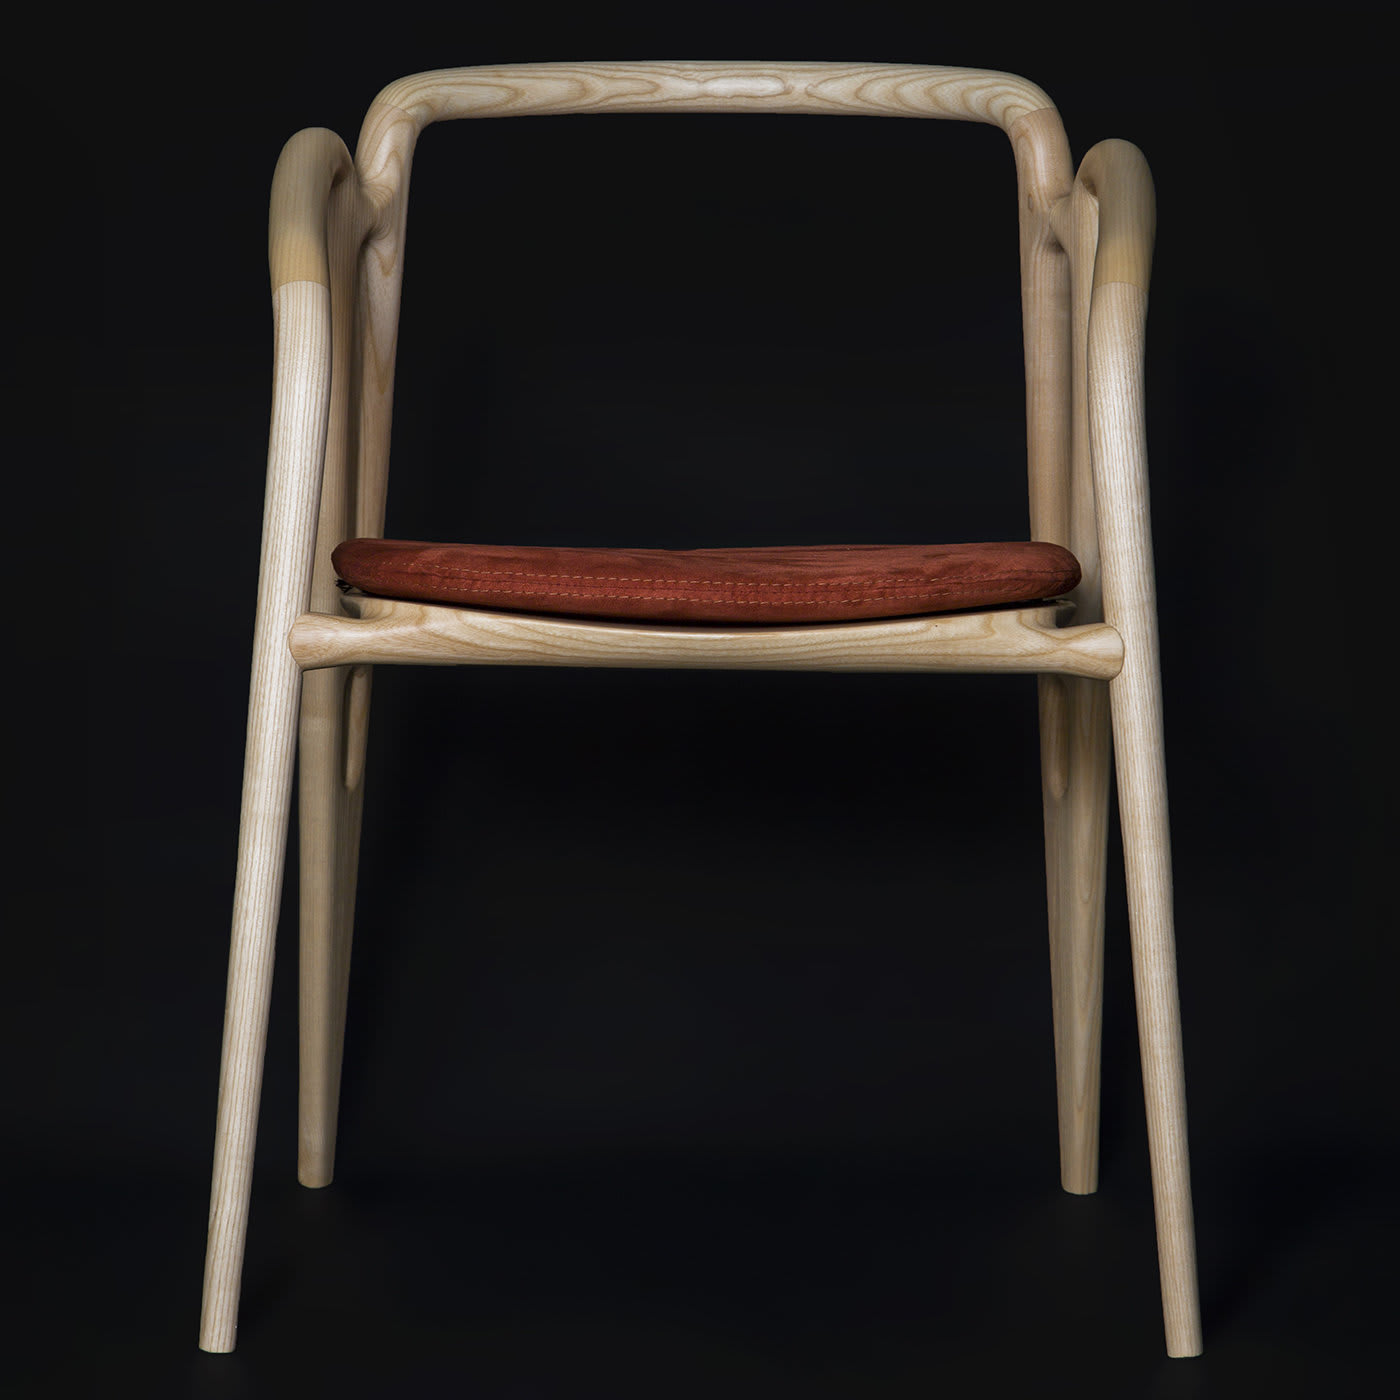 Vivo Chair with Orange Cushion - Marino Secco